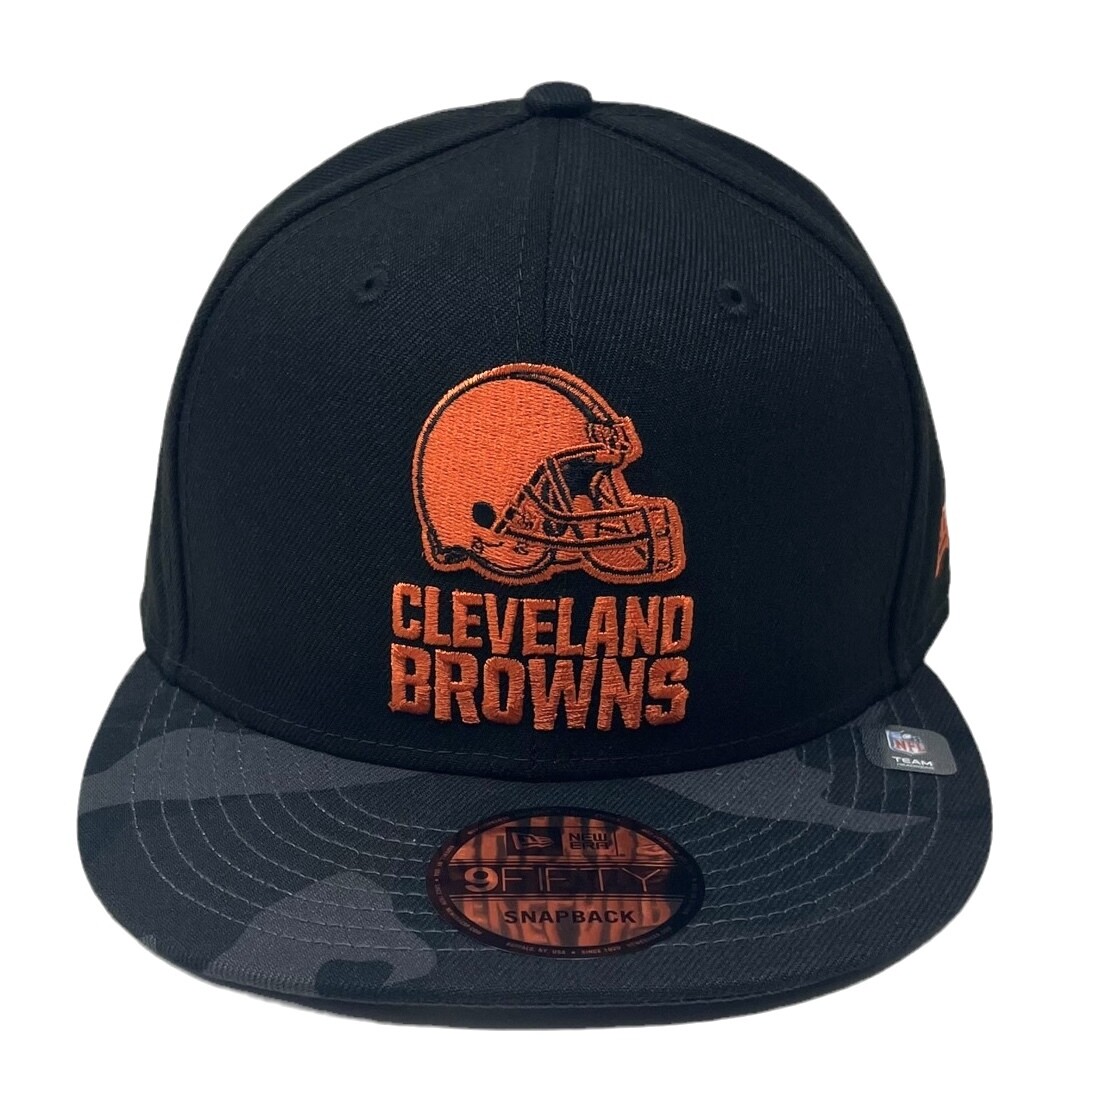 Cleveland Browns Men’s Black Camo New Era 9FIFTY Snapback Hat